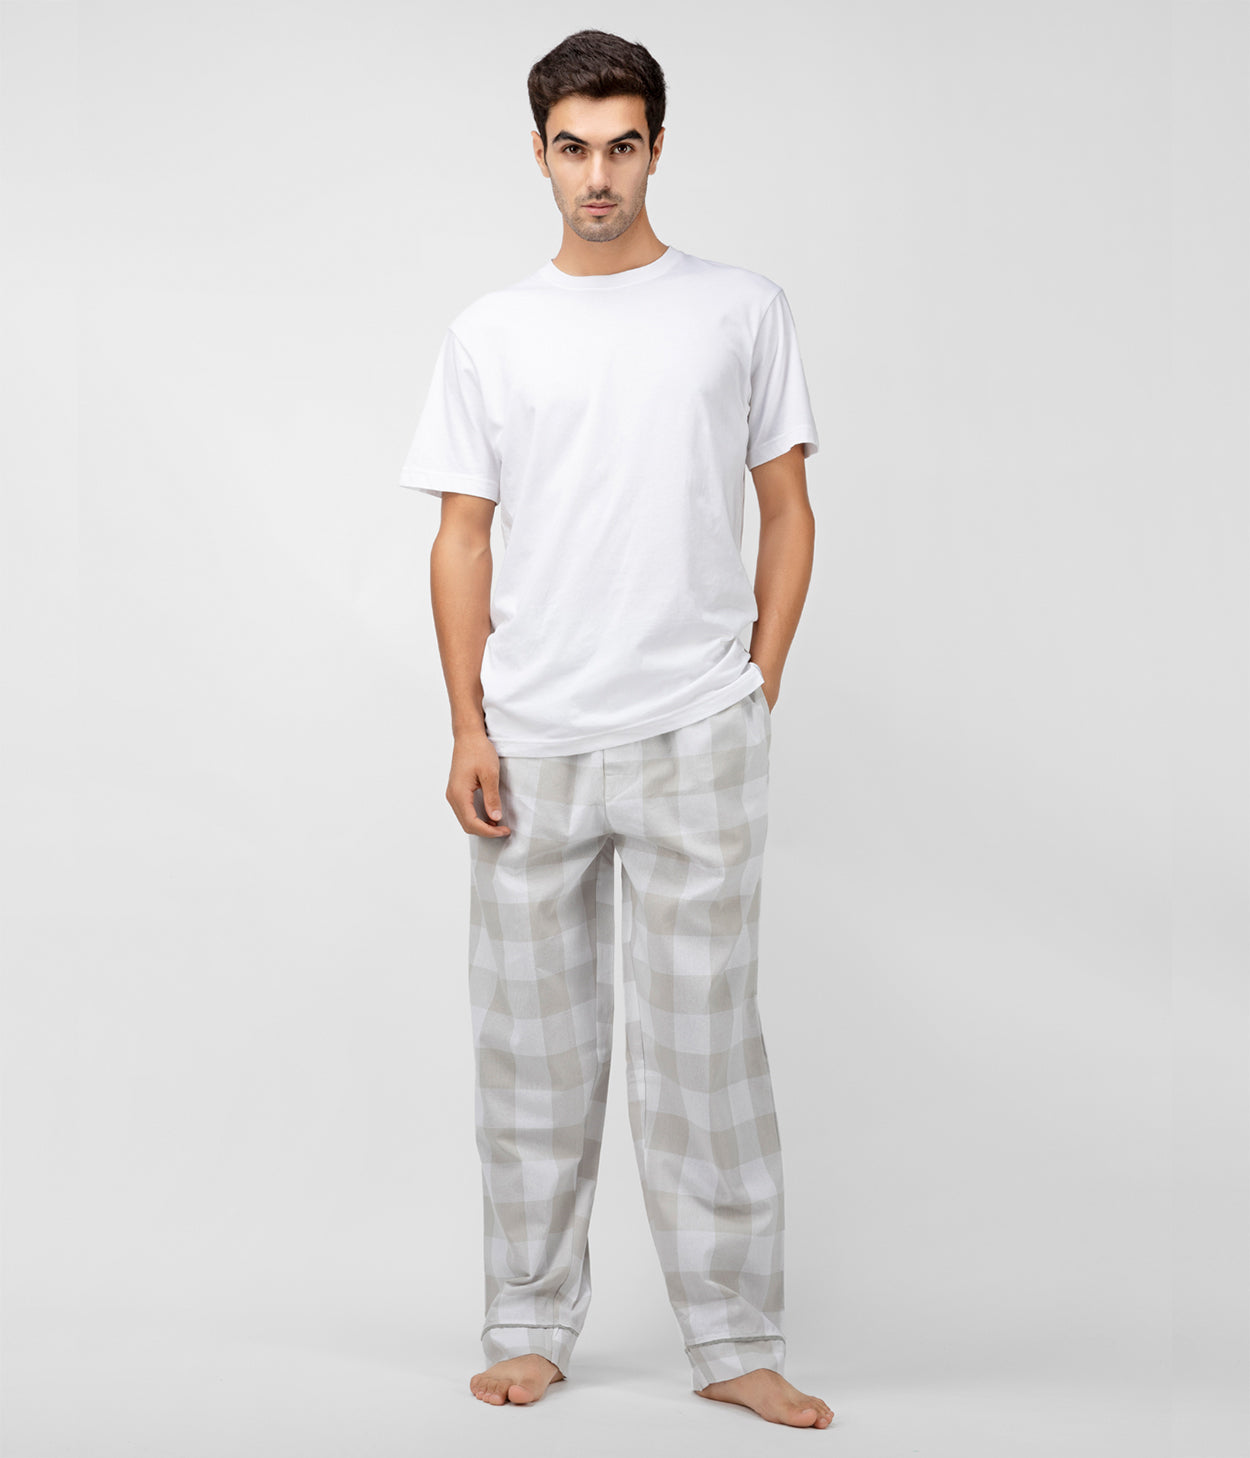 Checkers Mens Checkered Pyjama